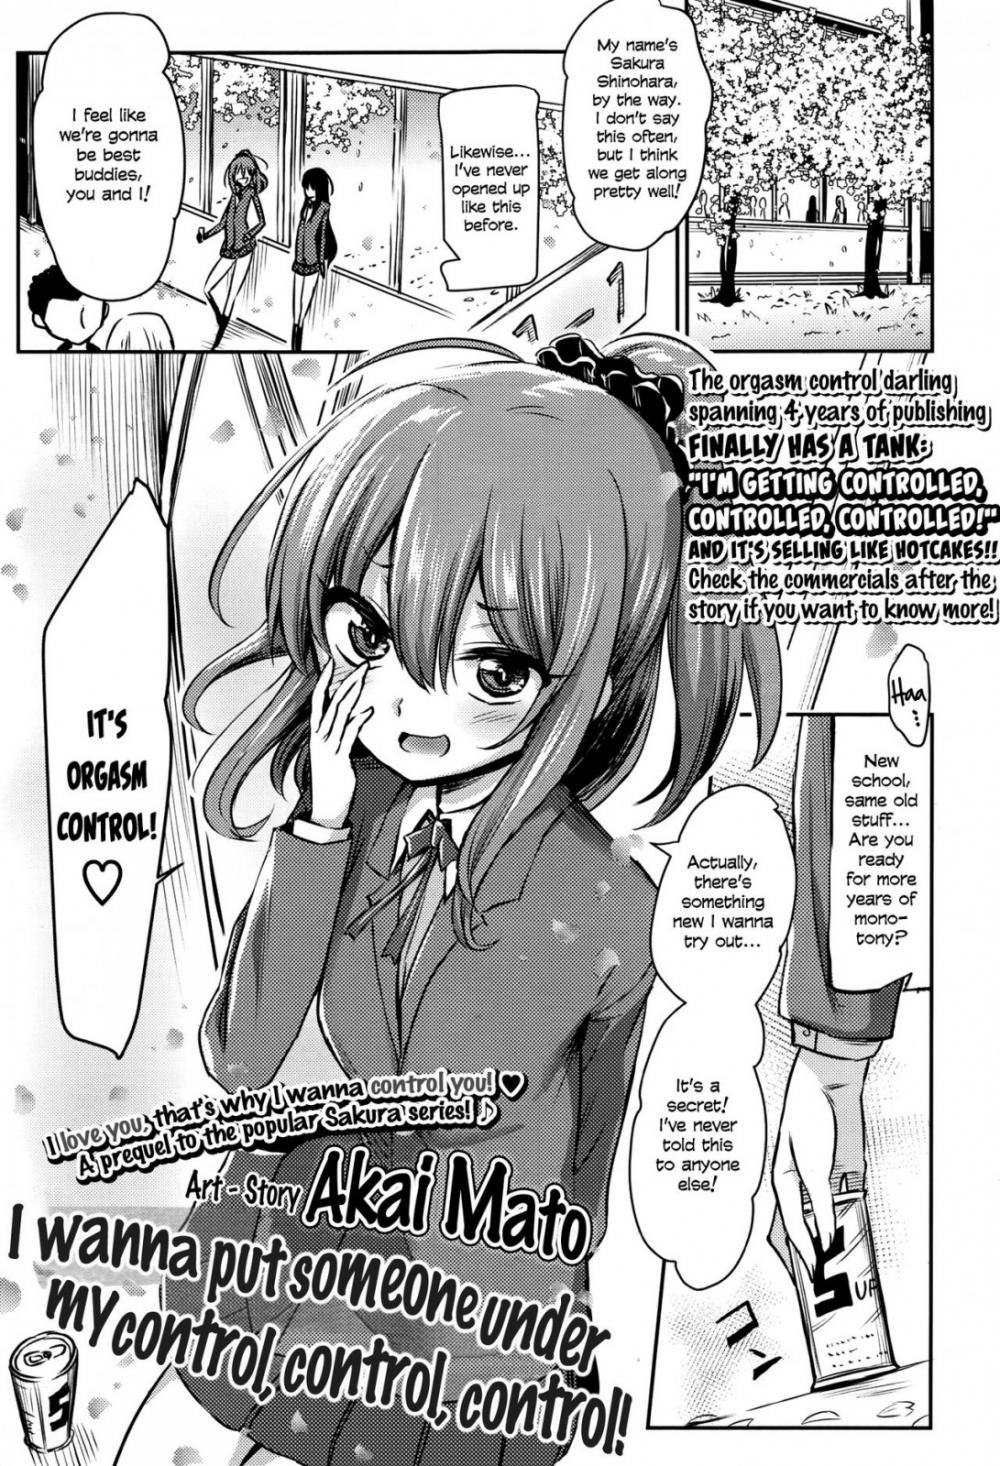 Hentai Manga Comic-I Wanna Put Someone Under My Control, Control, Control!-Read-1